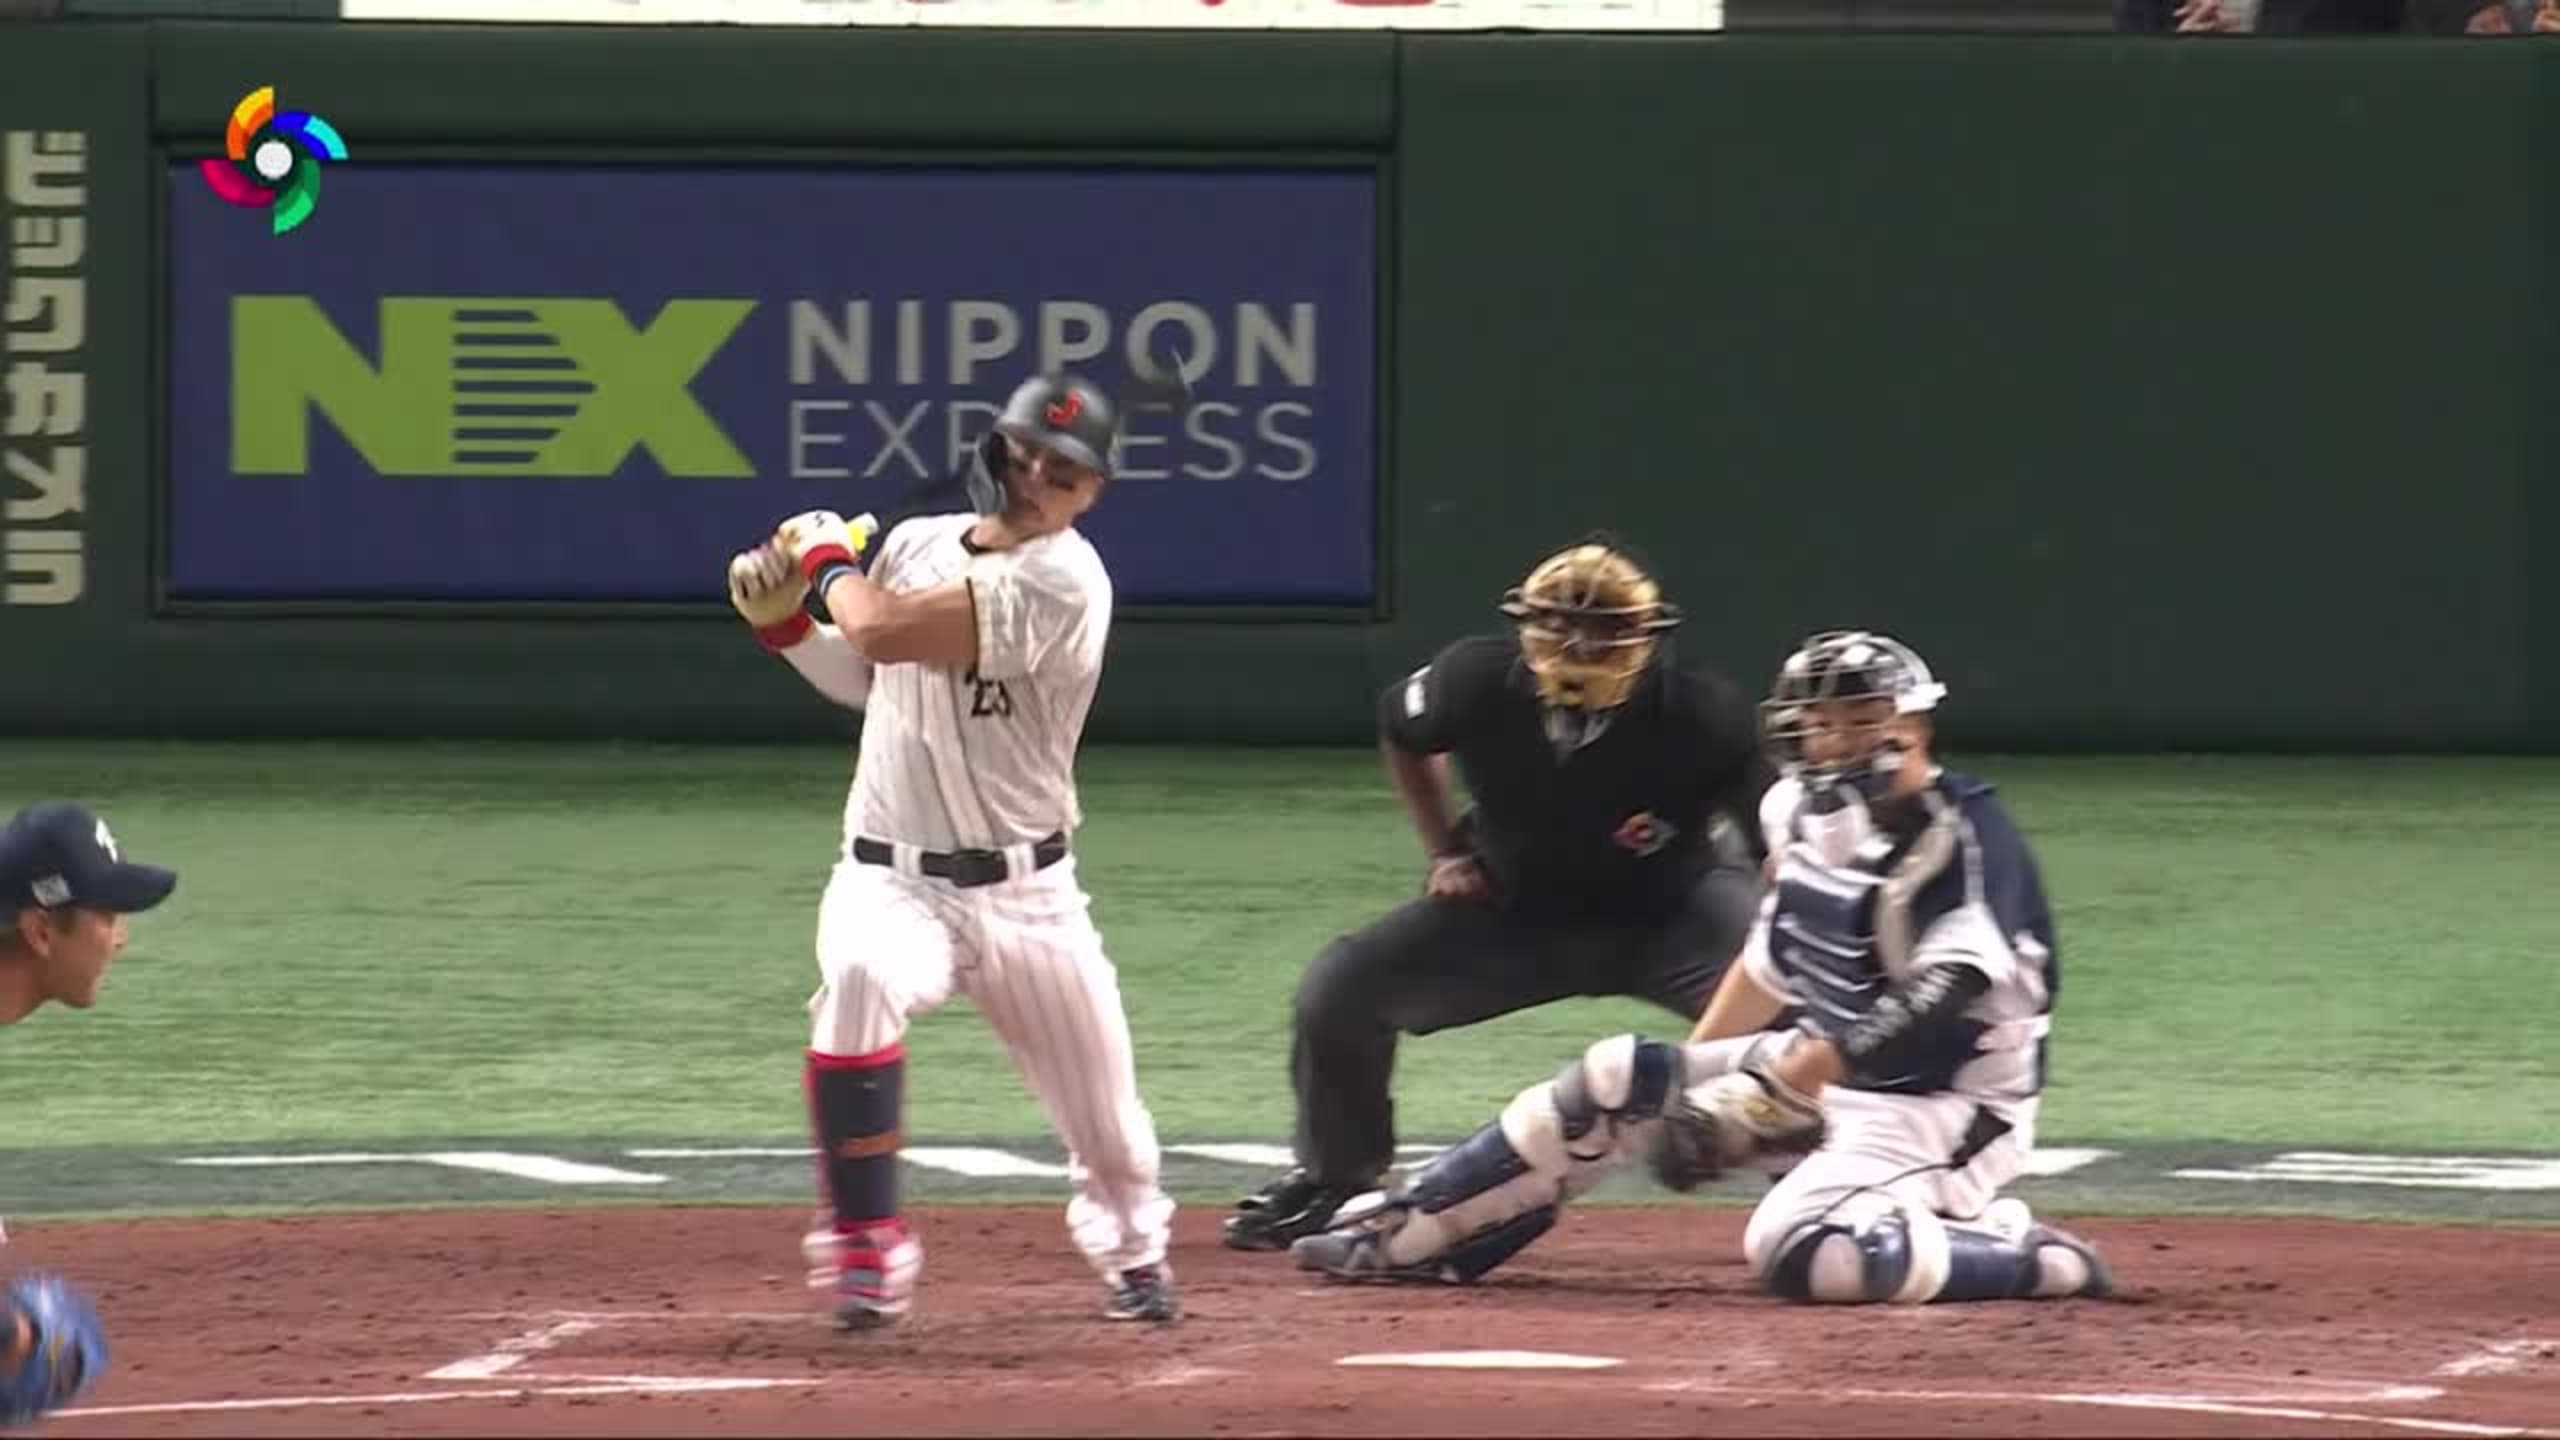 Baseball: Nootbaar's mom hopes he can get Japan WBC skipper airborne